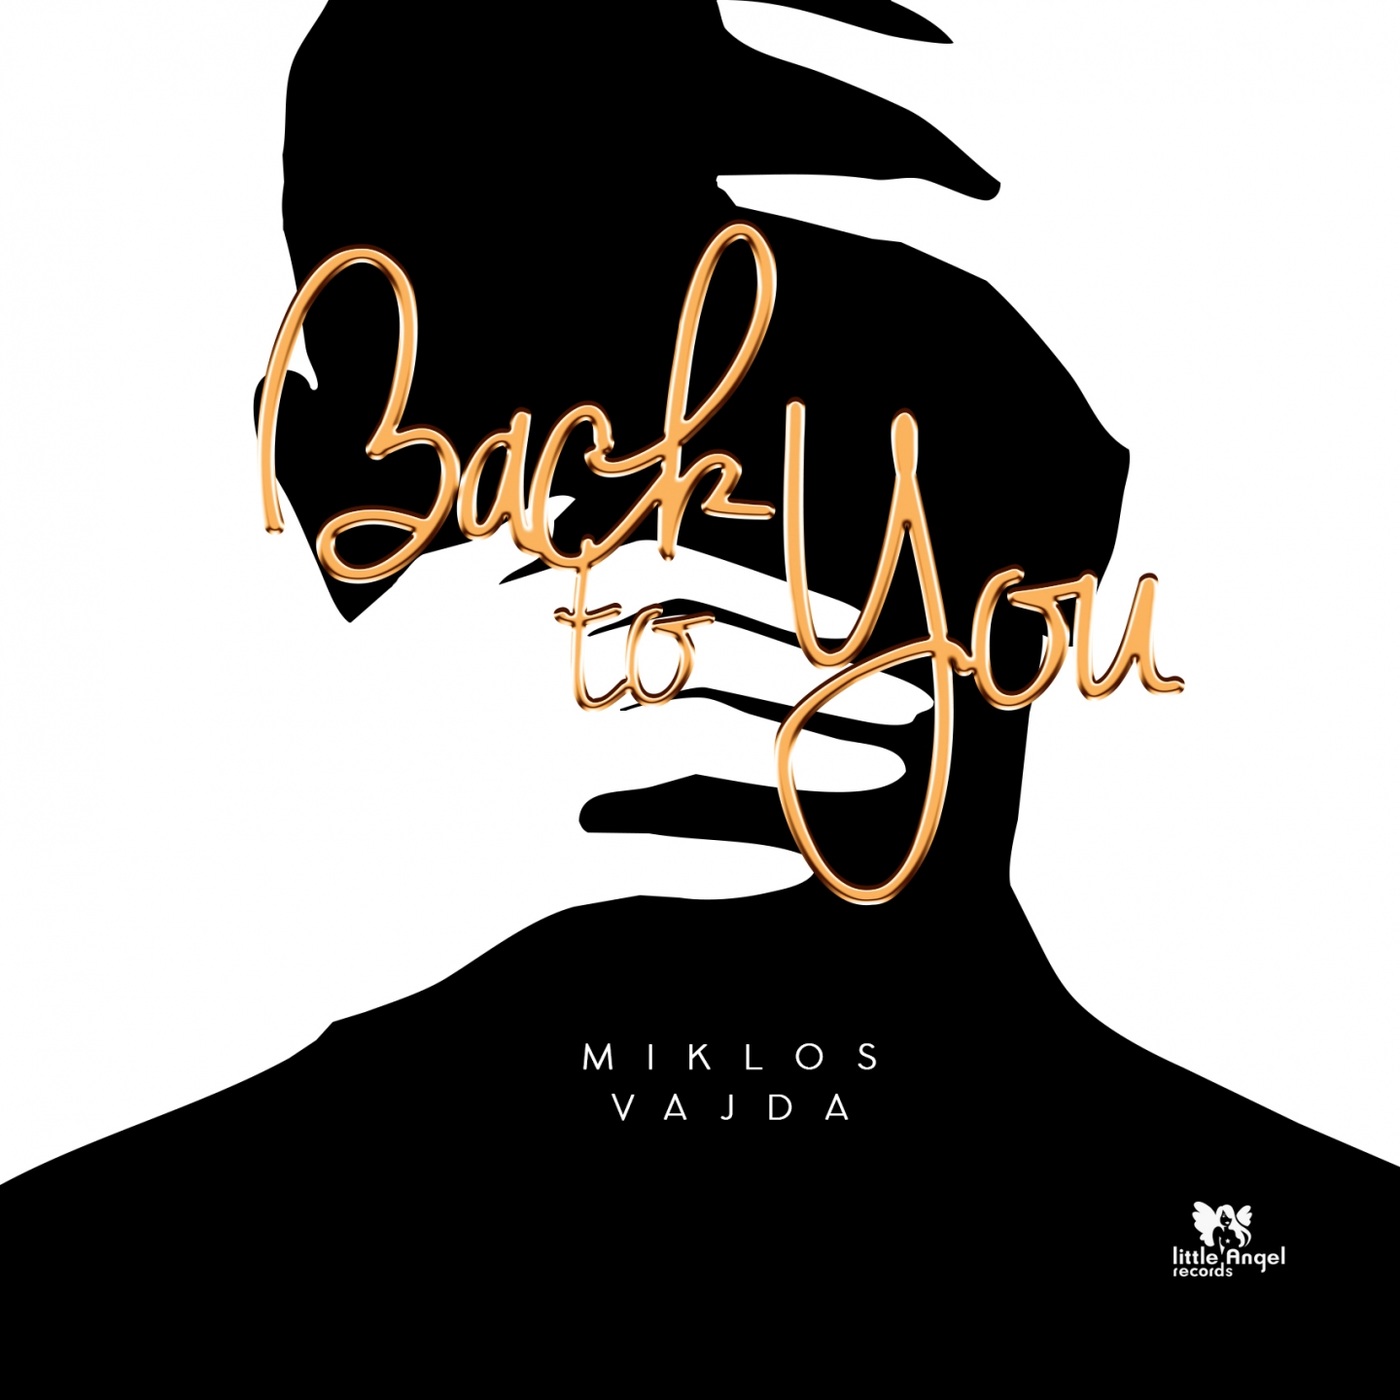 Miklos Vajda - Back to You / Little Angel Records